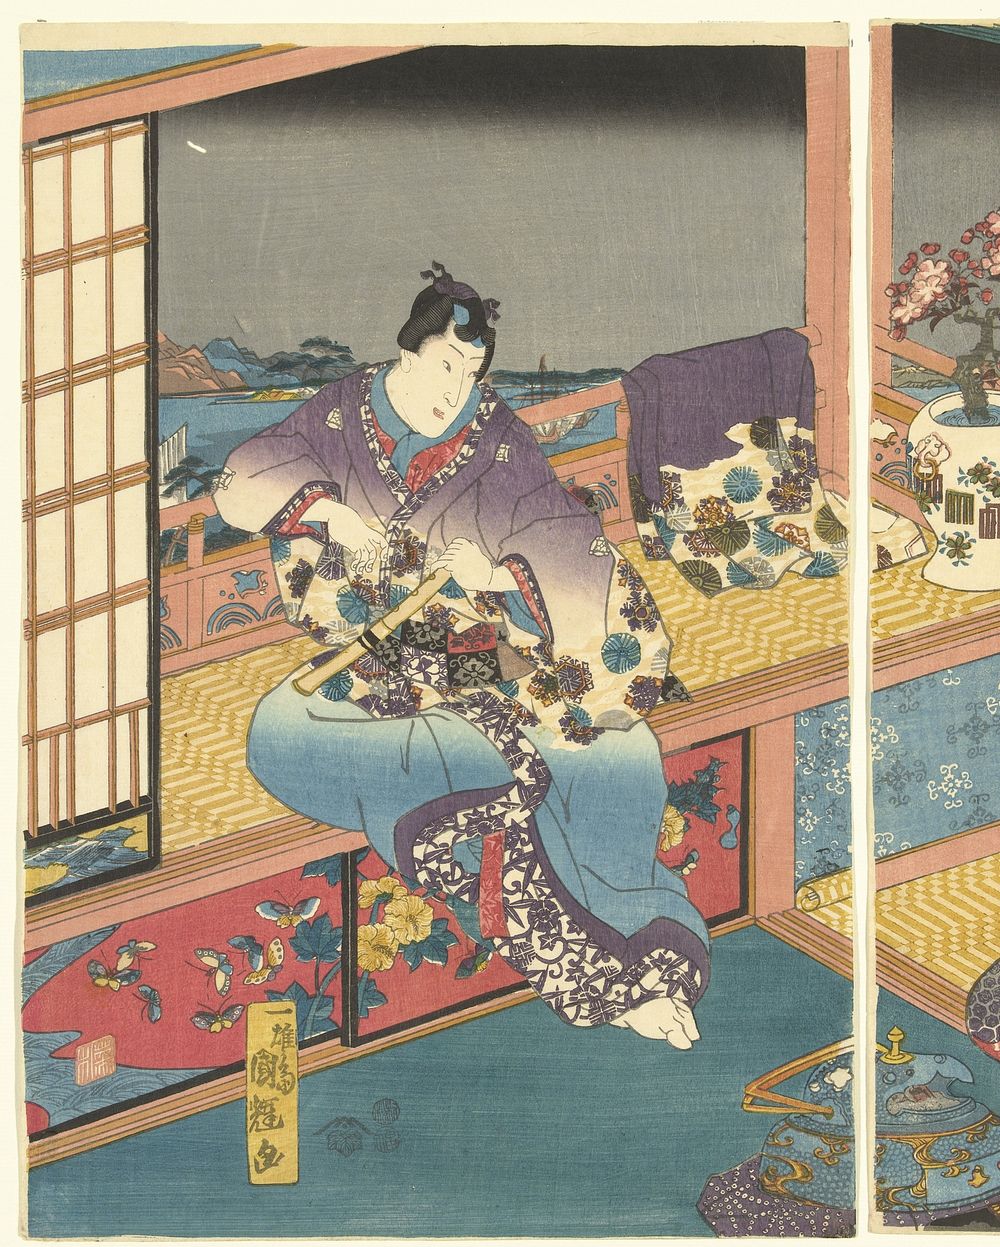 Bloemen (c. 1850) by Utagawa Kuniteru and Tsutaya Kichizo